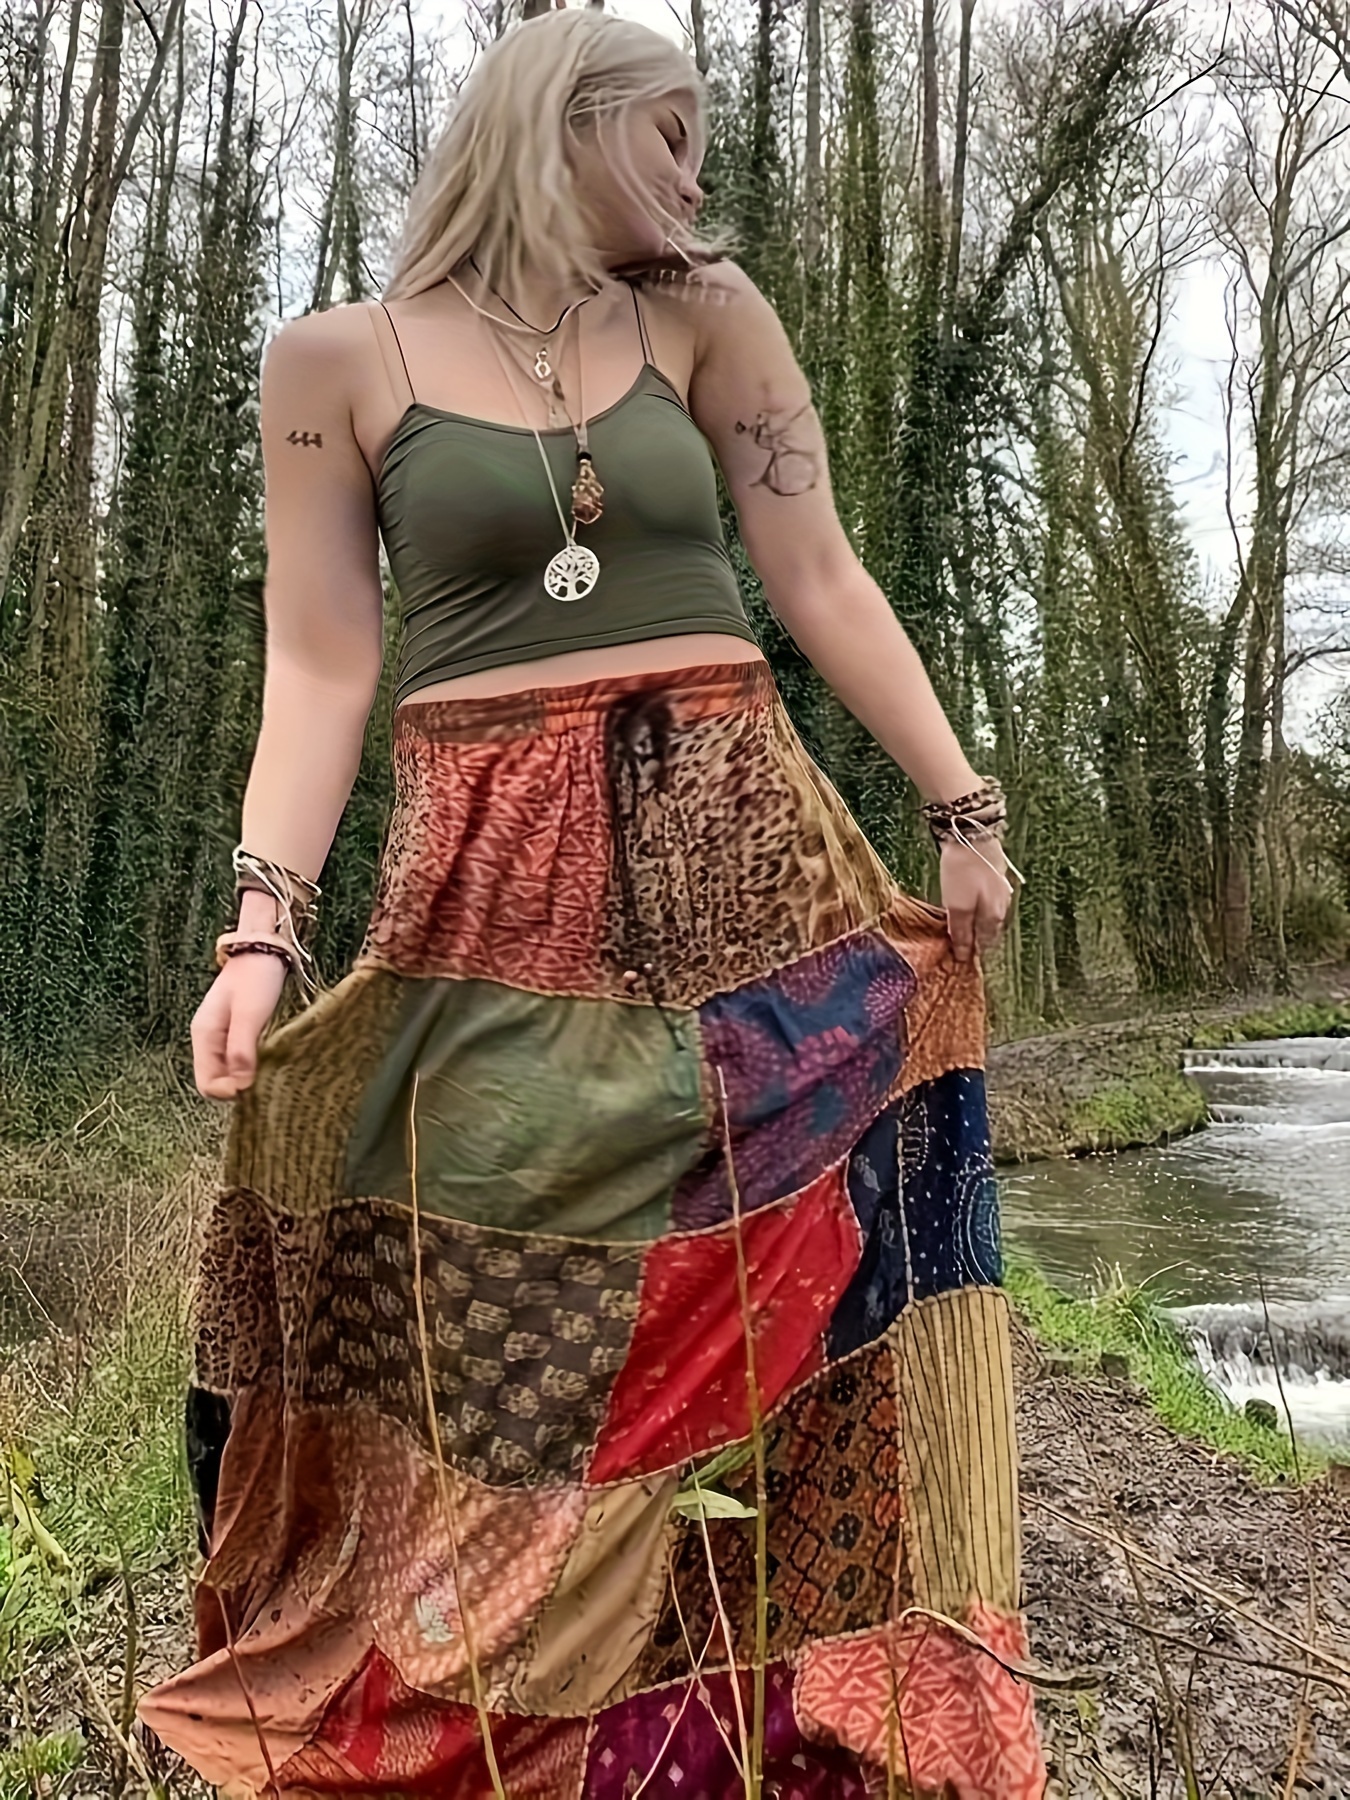 Disfraz De Chica Hippie Talla Grande Para Mujer Talla G